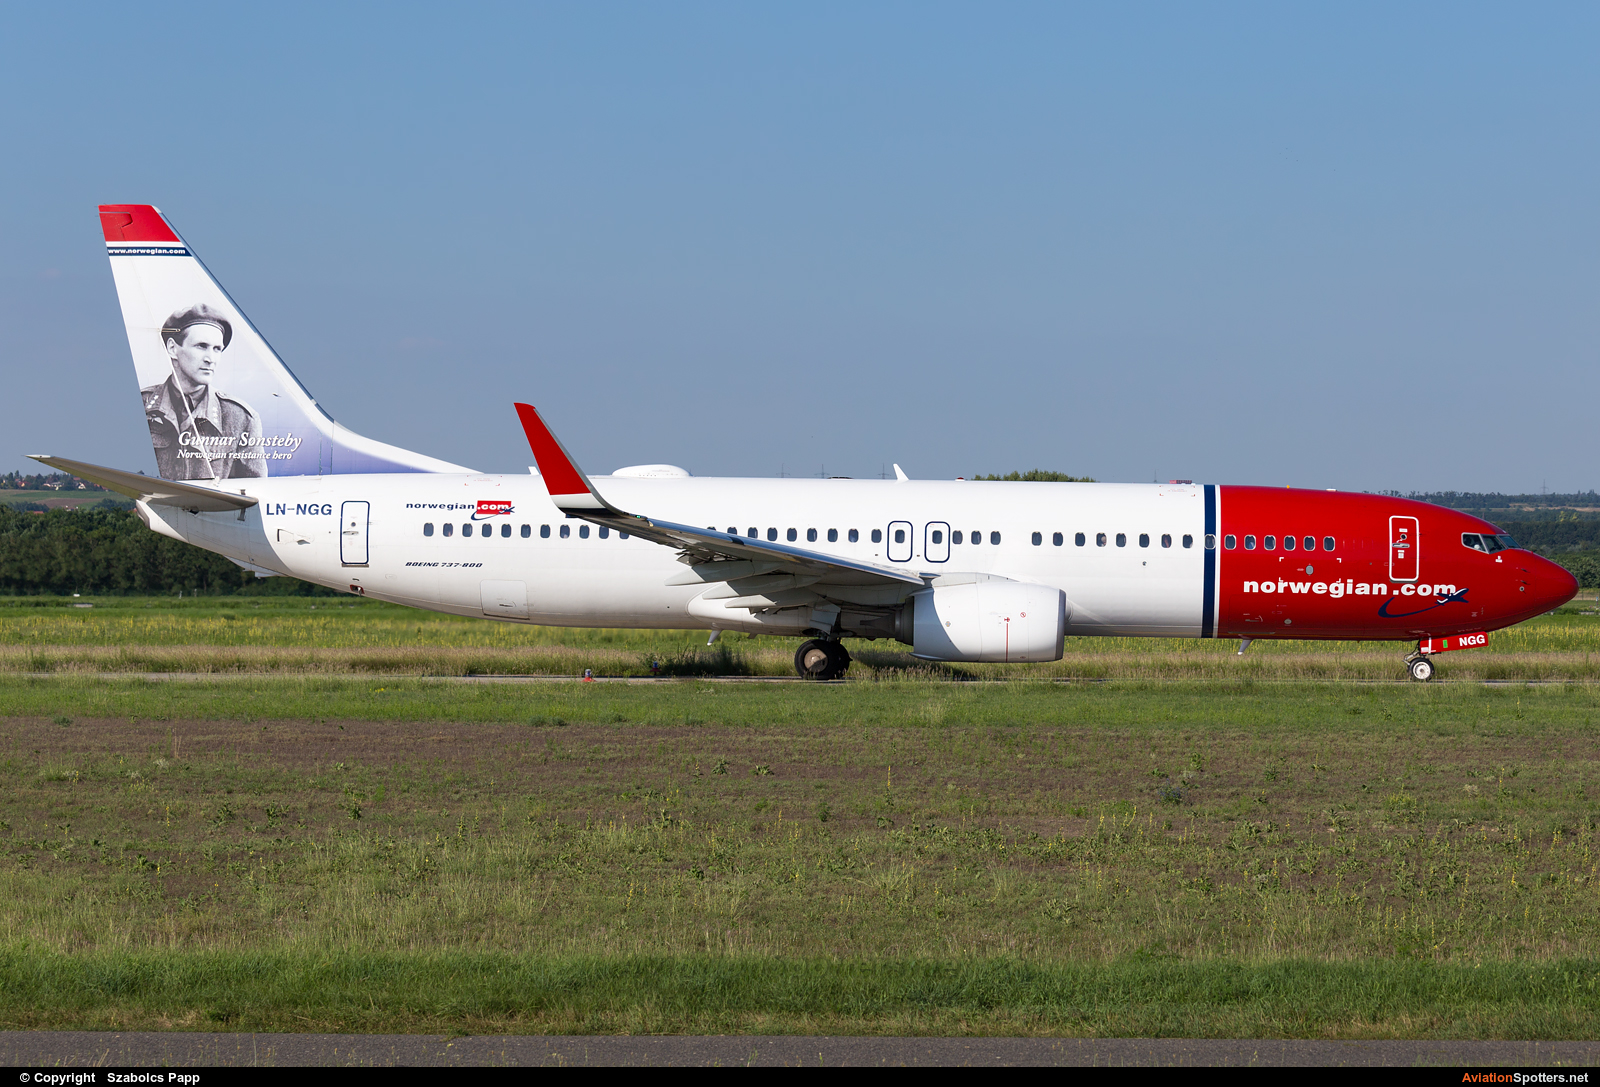 Norwegian Air Shuttle  -  737-800  (LN-NGG) By Szabolcs Papp (mr.szabi)